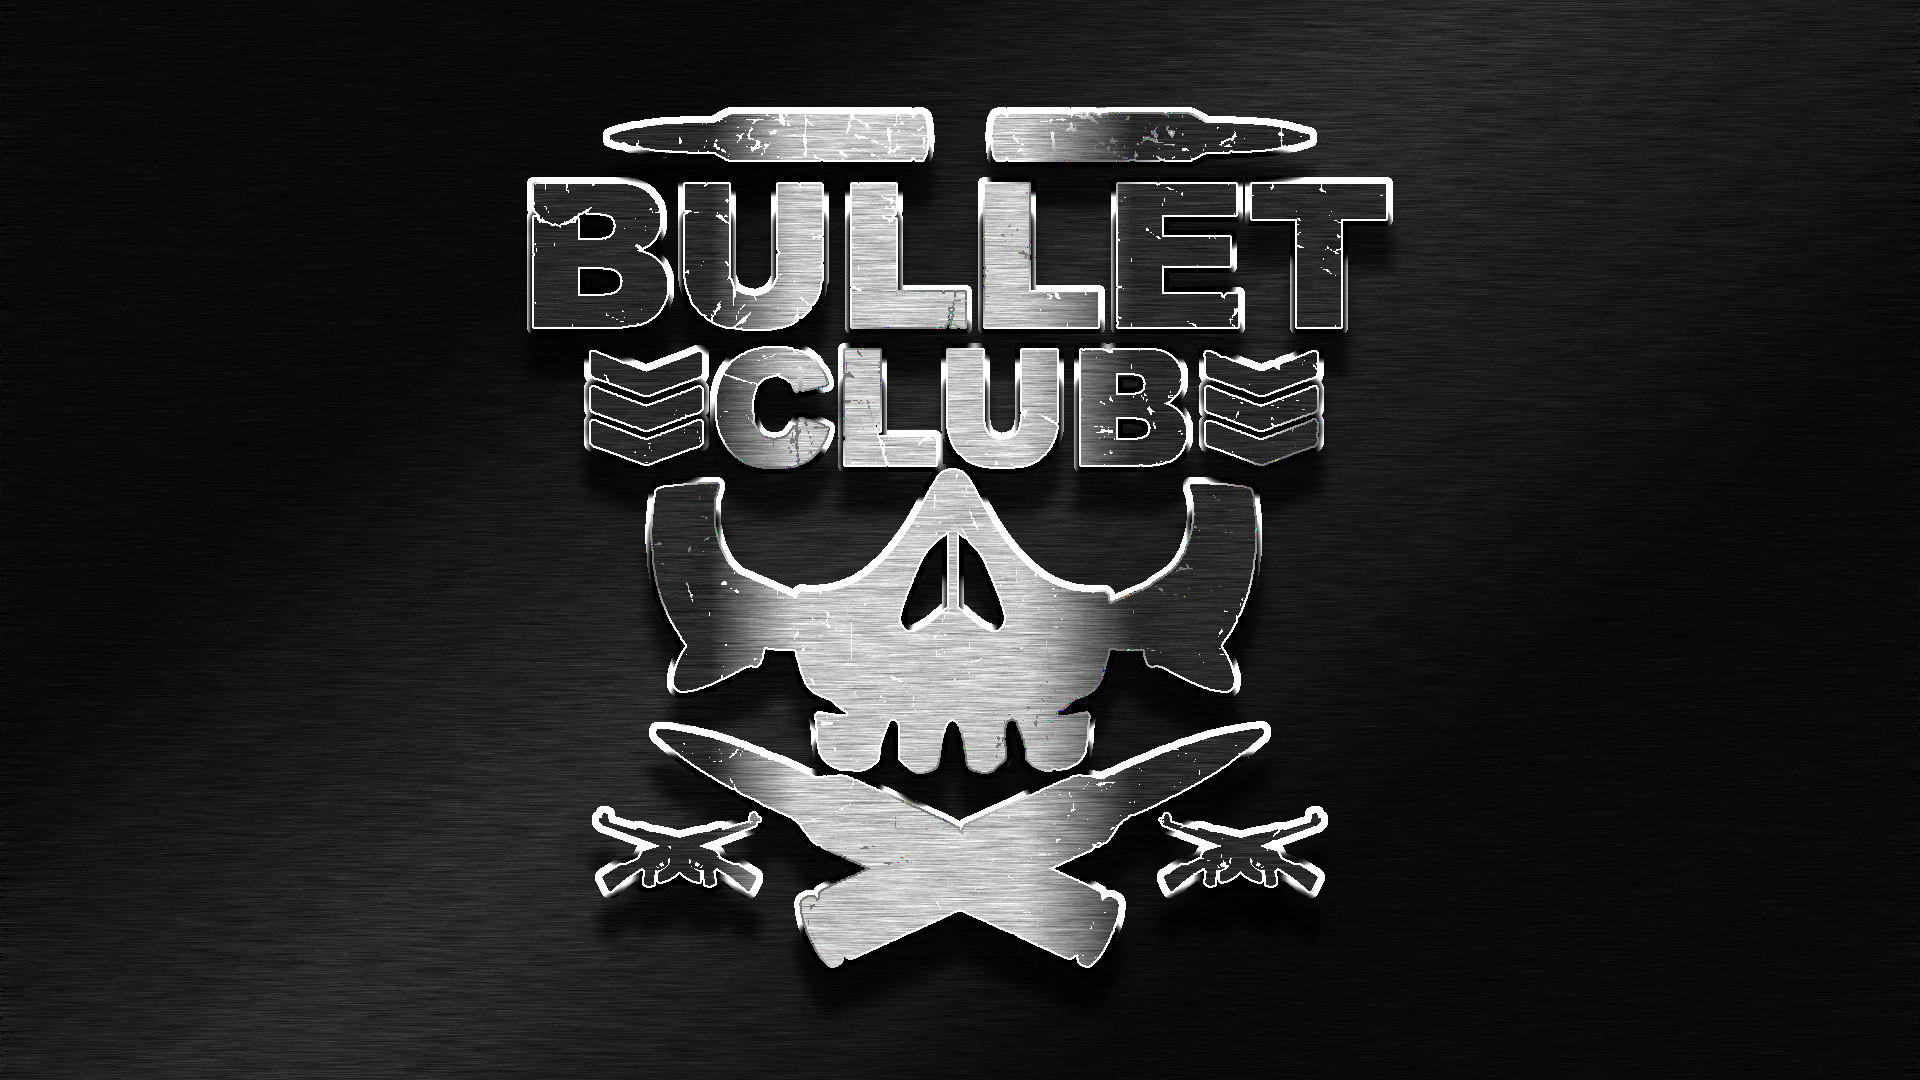 1920x1080 Bullet Club Logo Wallpaper (1080p) by DarkVoidPictures on DeviantArt